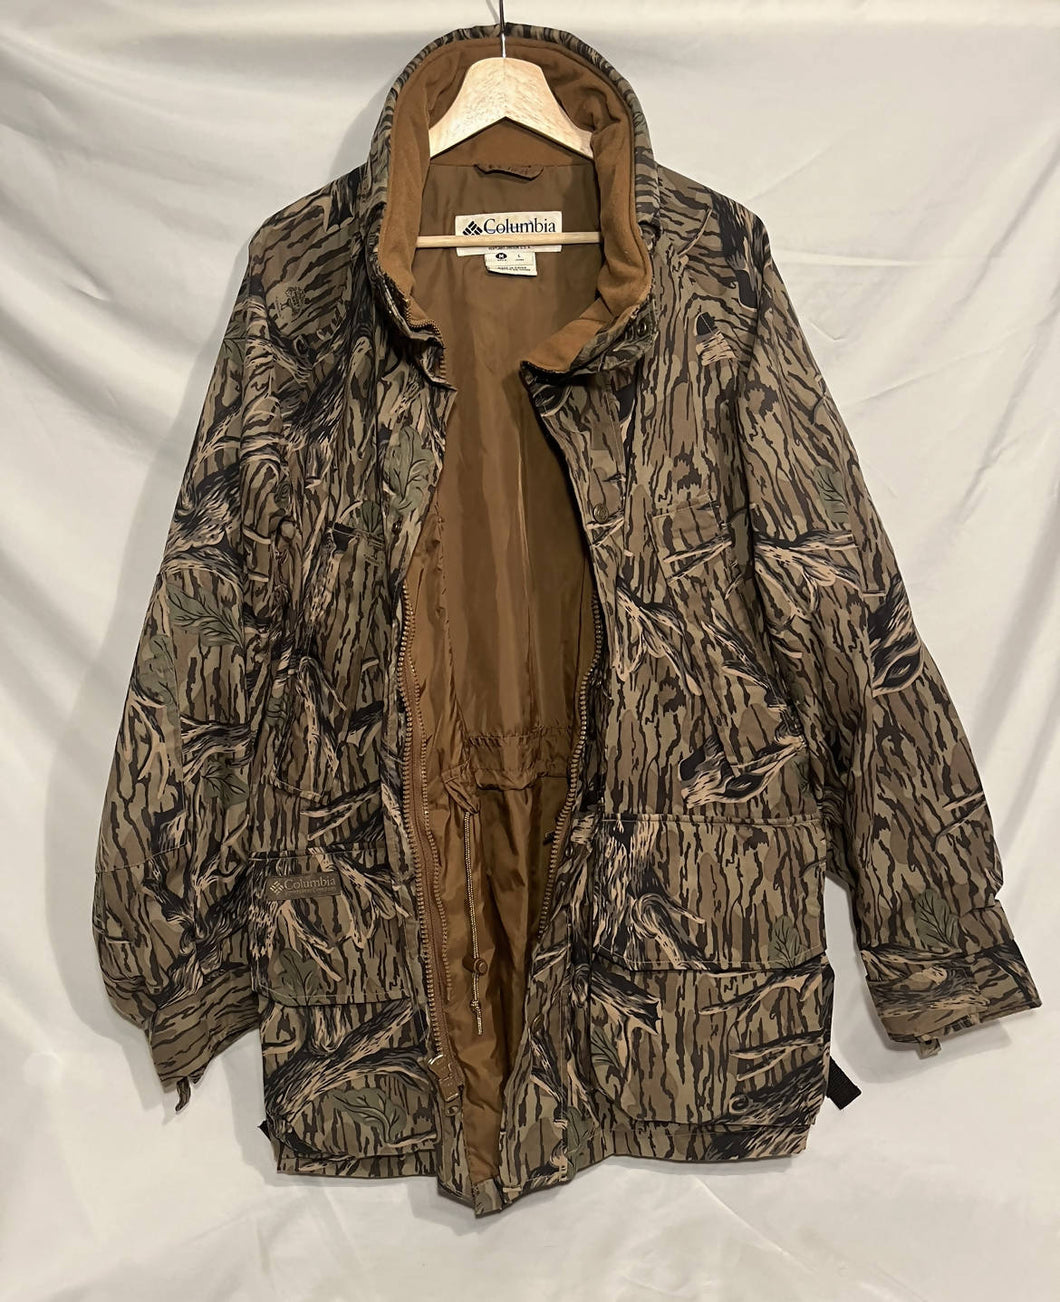 Mossy Oak Treestand Columbia Jacket (L)